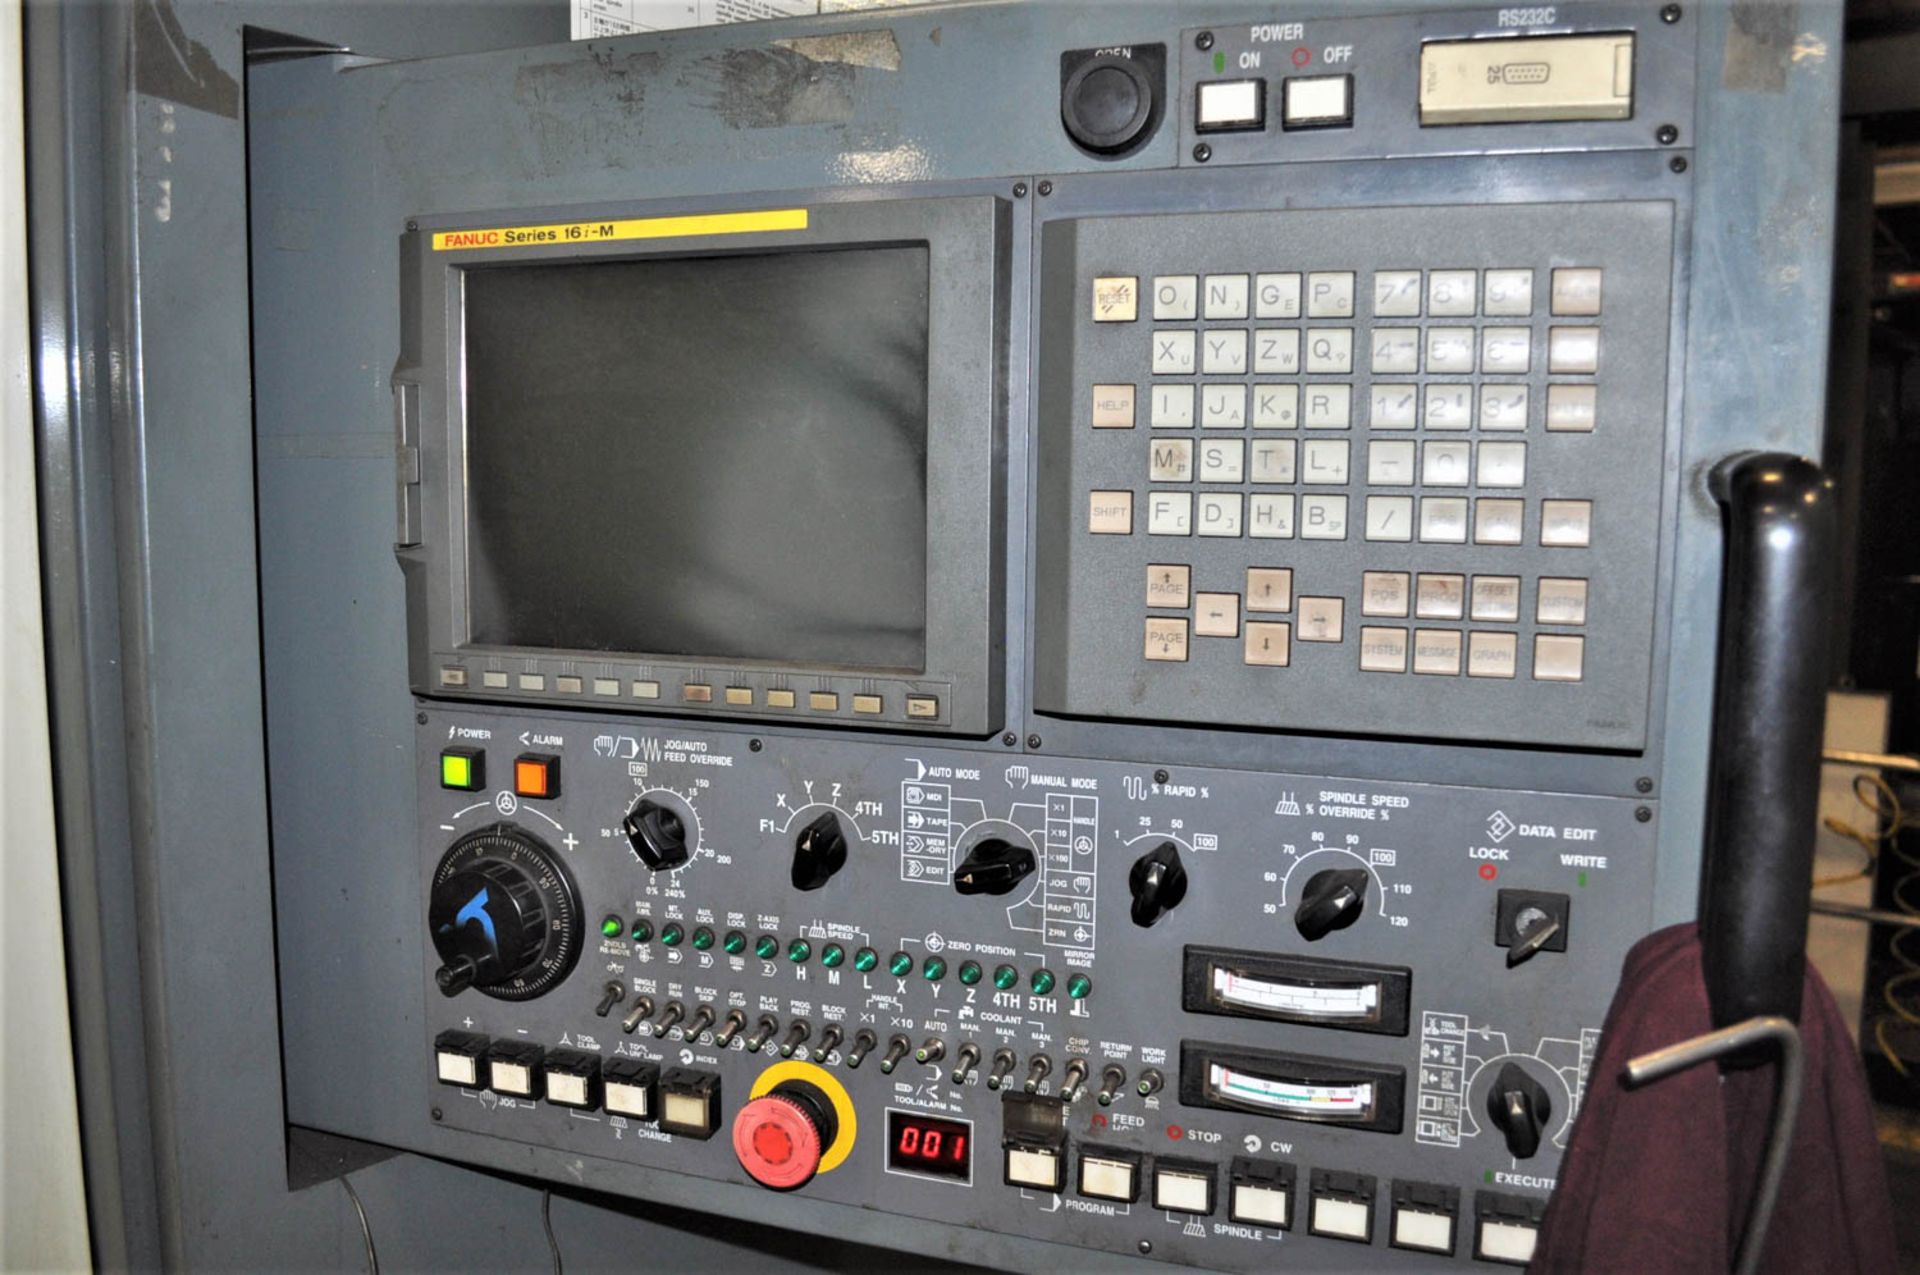 KITAMURA MYCENTER MDL. HX400 CNC HORIZONTAL MACHINING CENTER, WITH FANUC 16iM CNC CONTROL, - Image 5 of 8